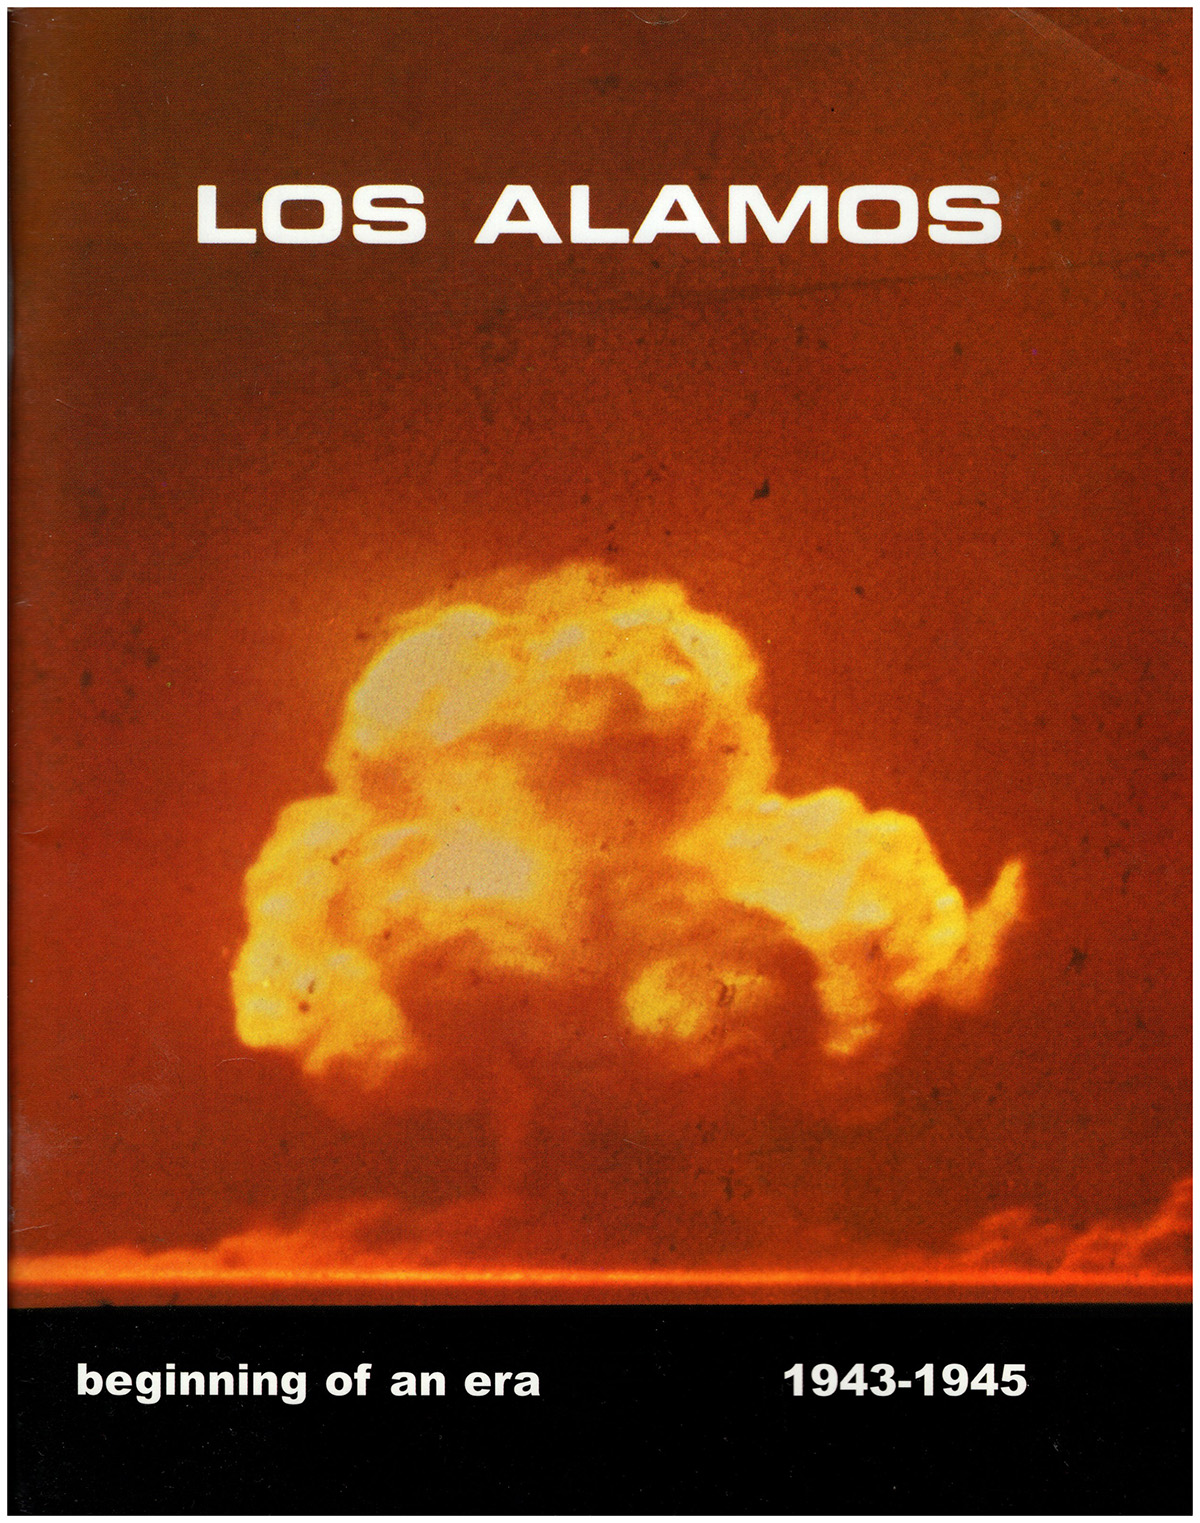 Los Alamos National Laboratory - Los Alamos; Beginning of an Era 1943-1945